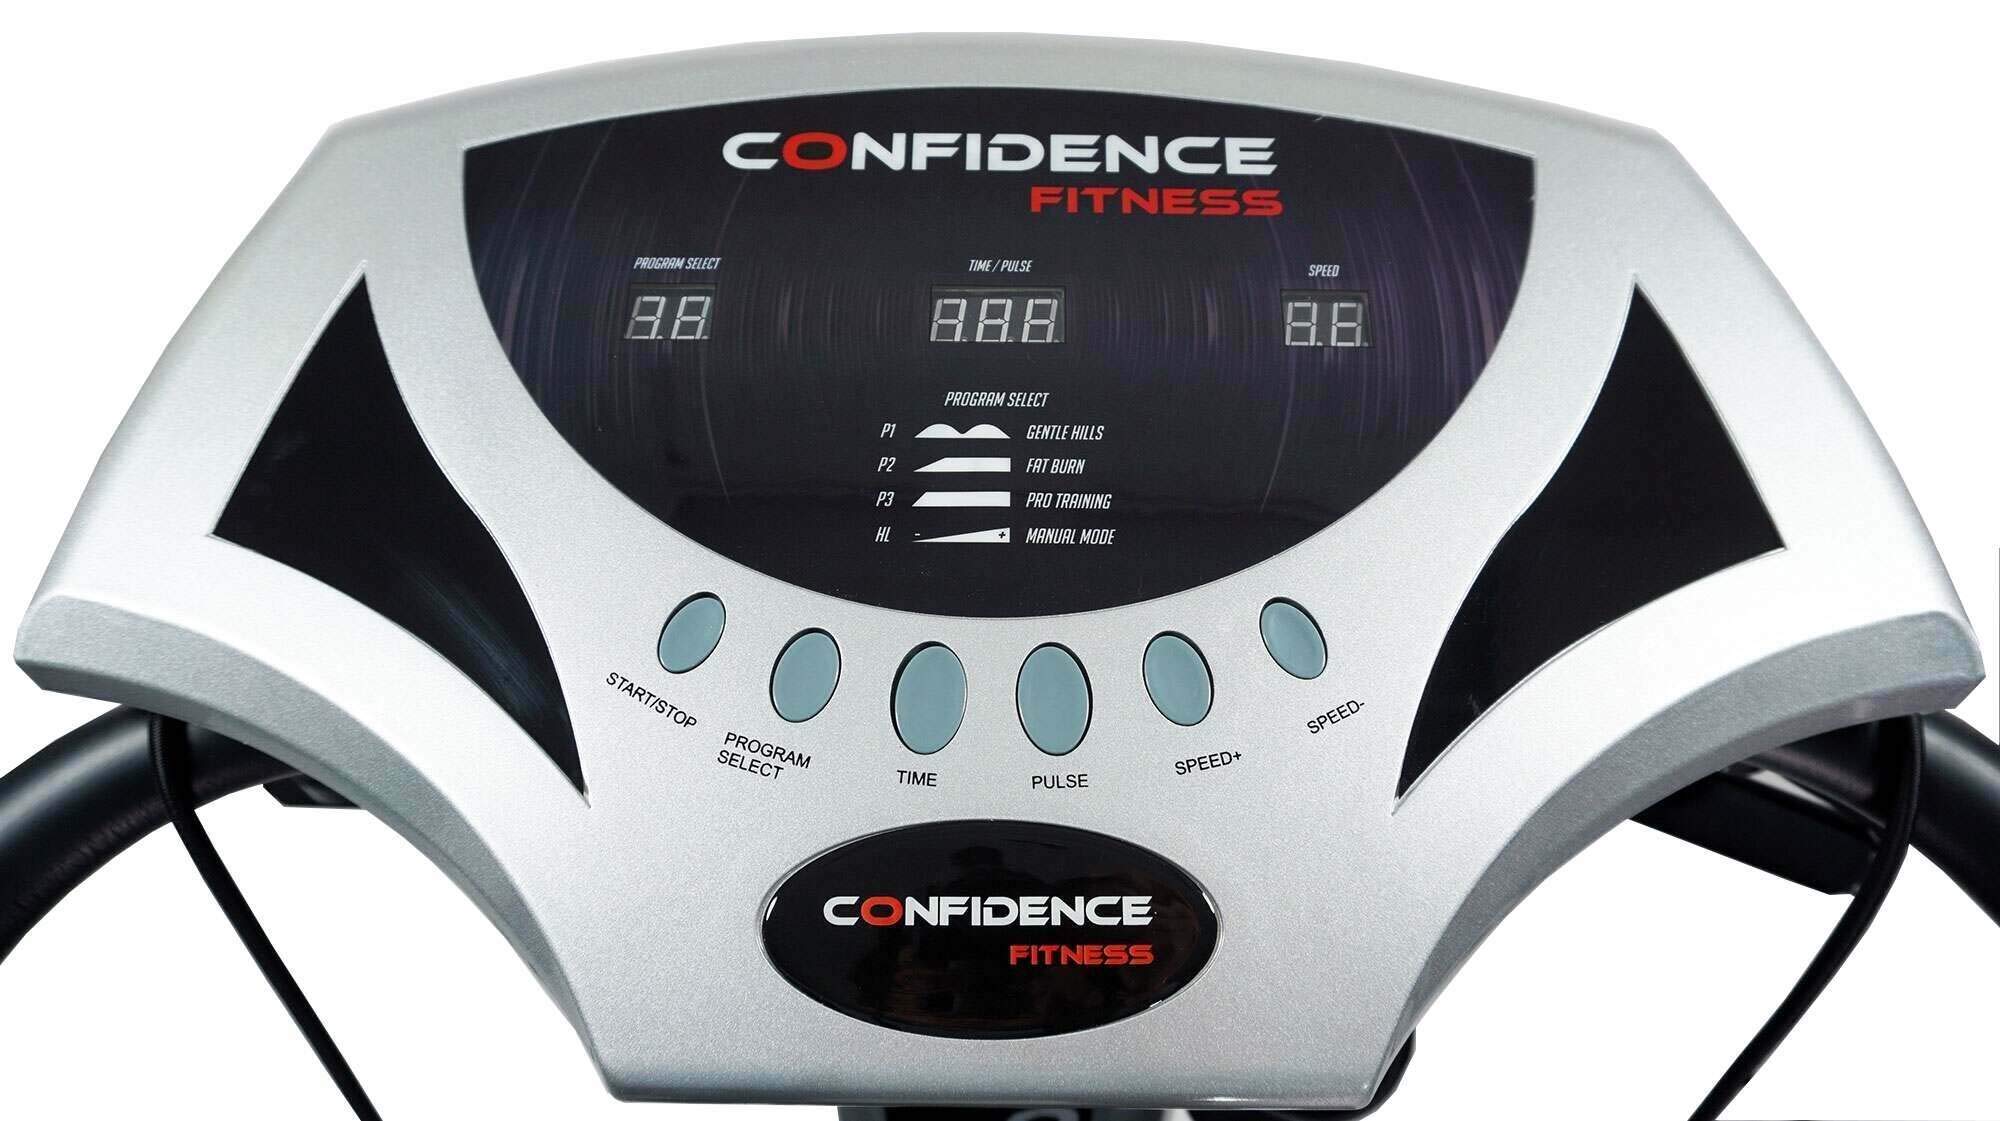 Confidence Fitness Slim Full Body Vibration Platform Fitness Machine, Black